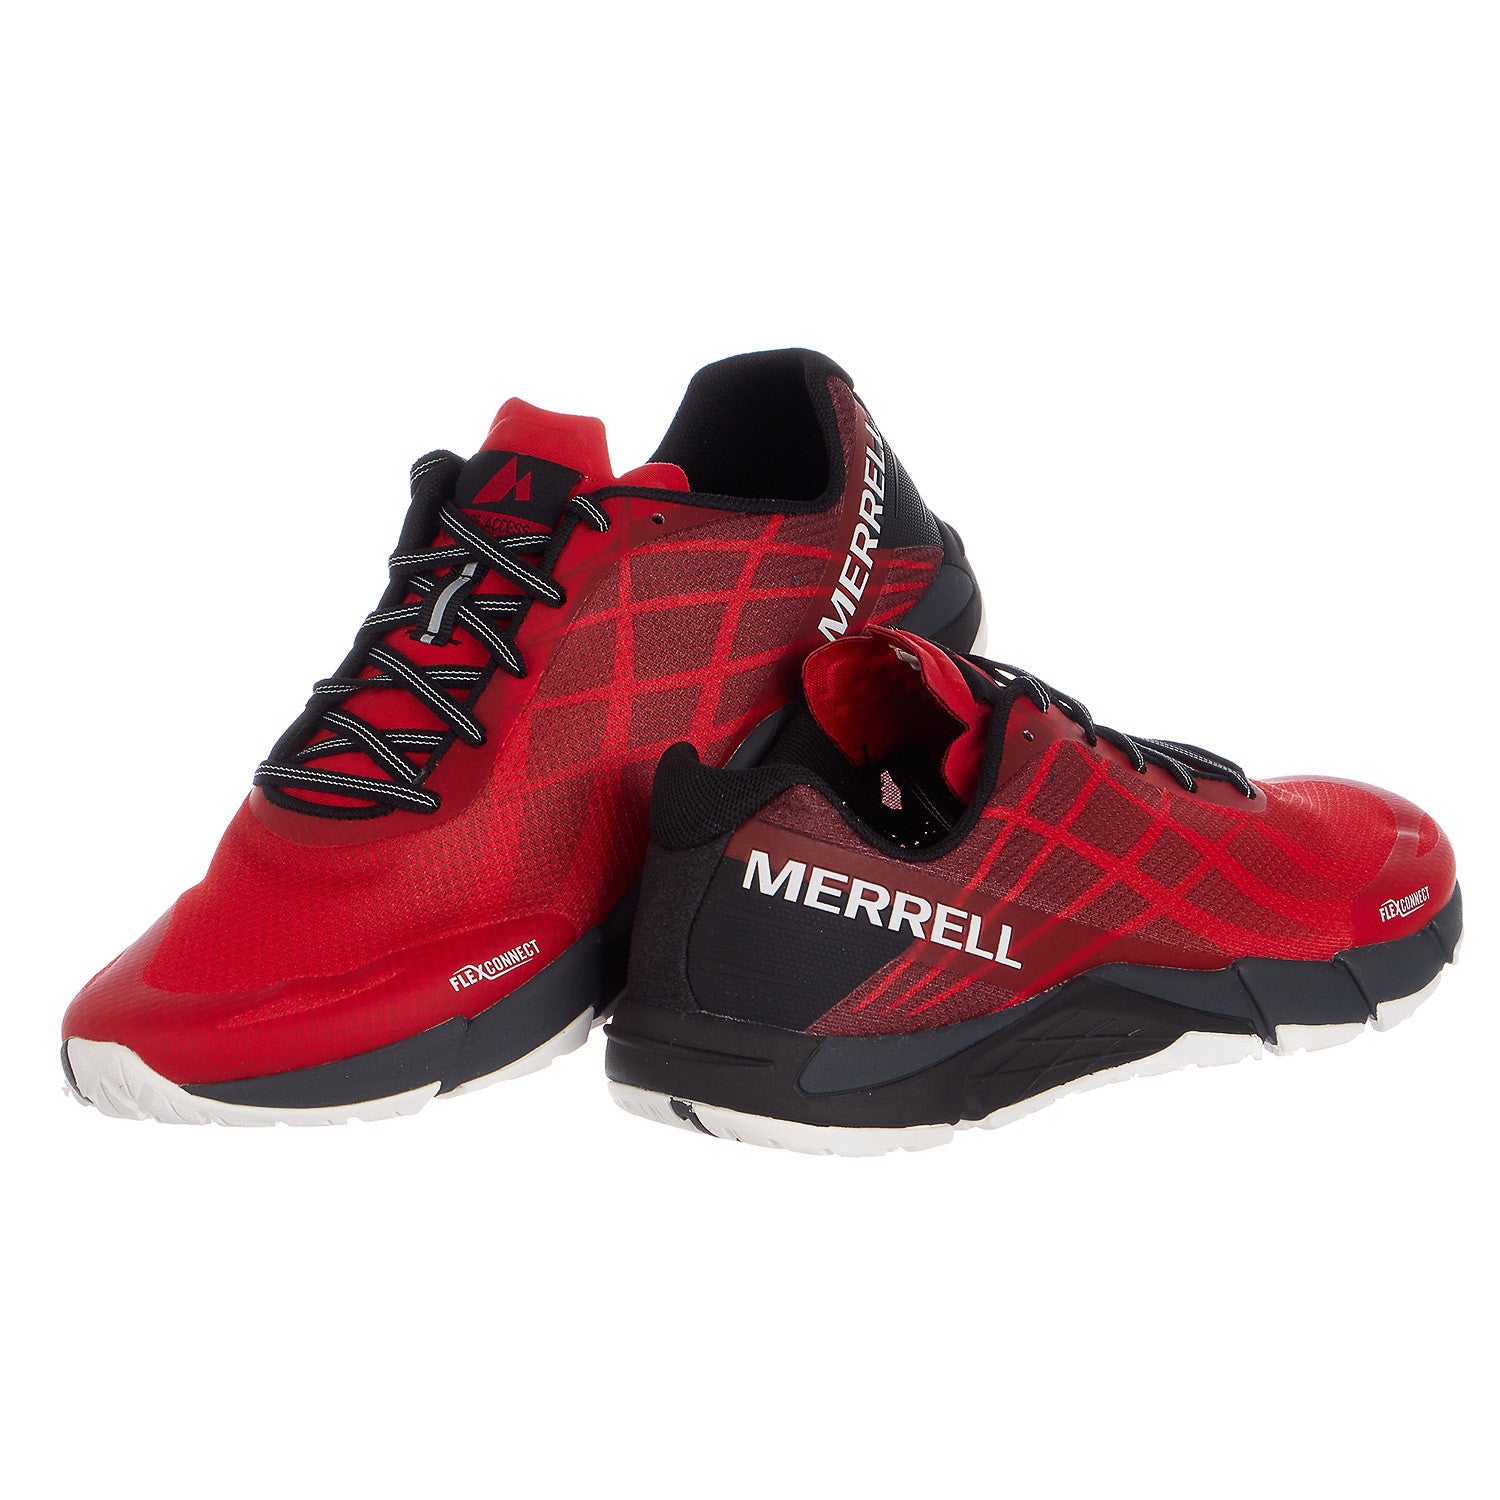 Merrell Moab Mid Waterproof Hiking Boot - Men's - Shoplifestyle